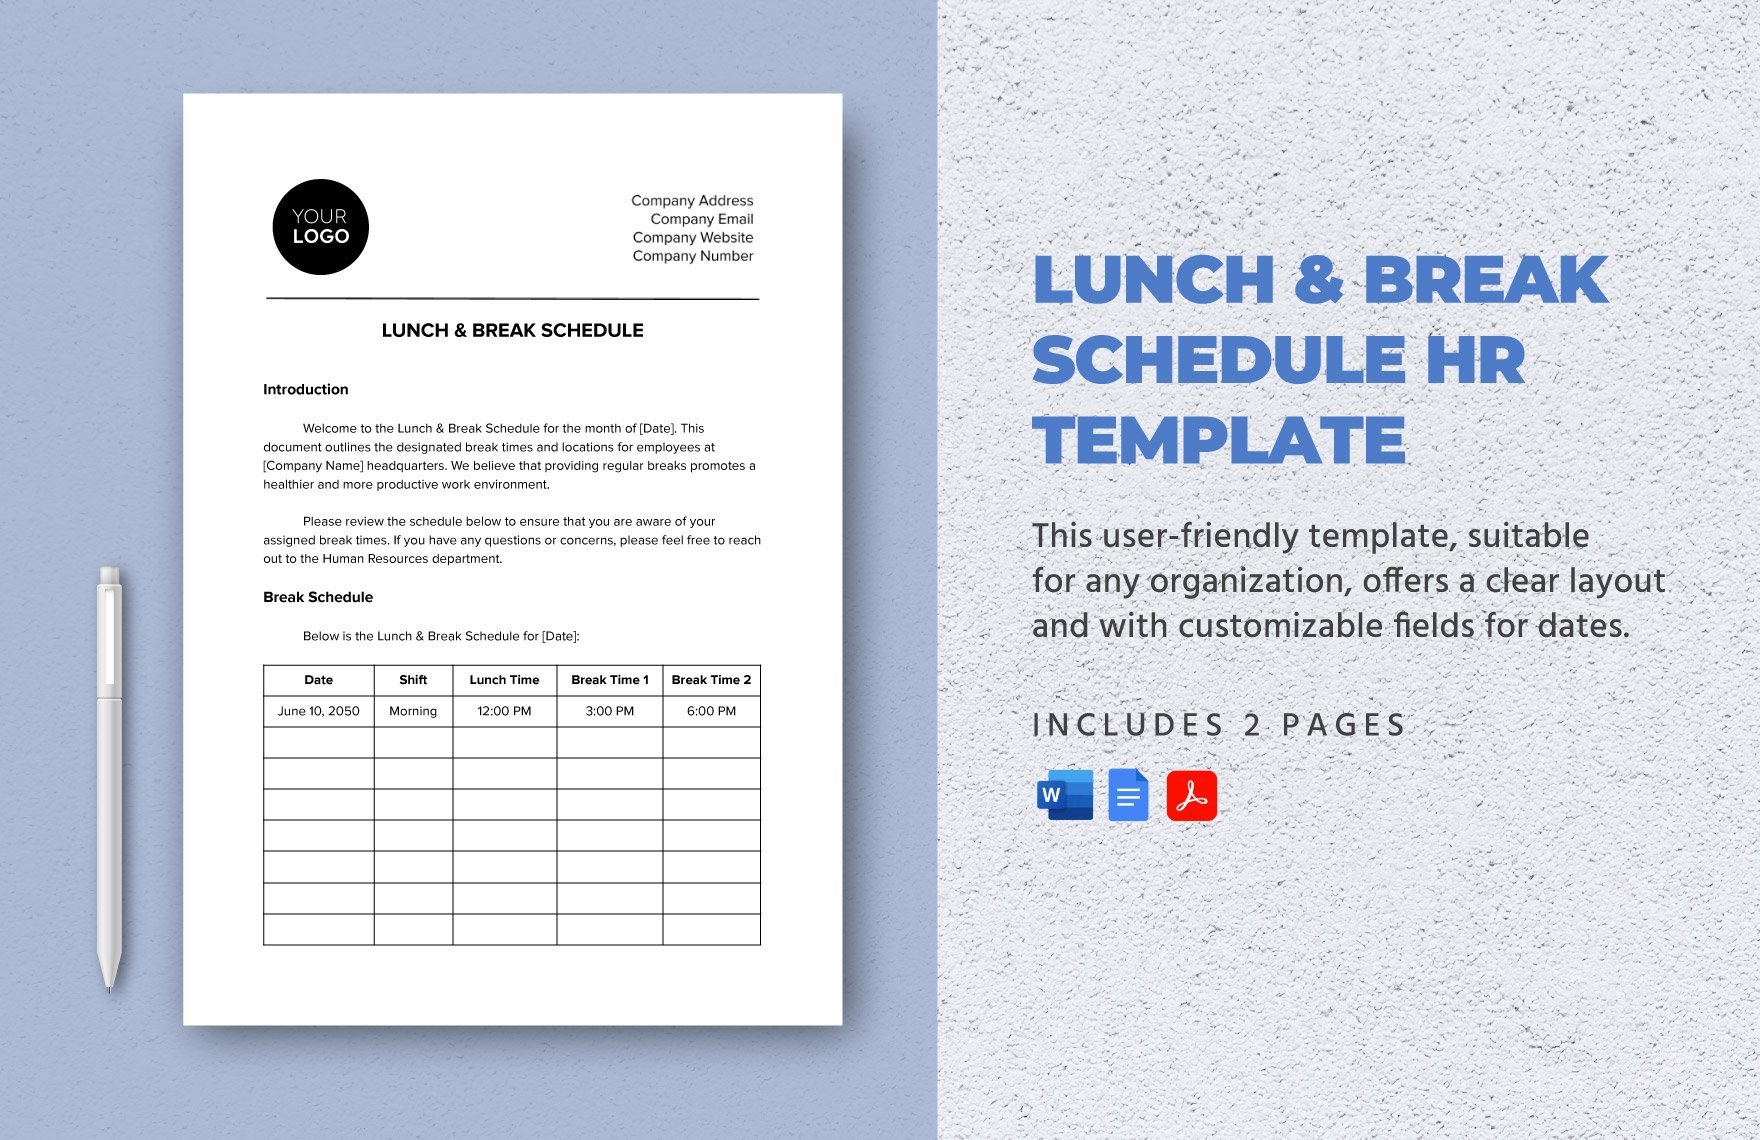 Lunch & Break Schedule HR Template in Word, Google Docs, PDF